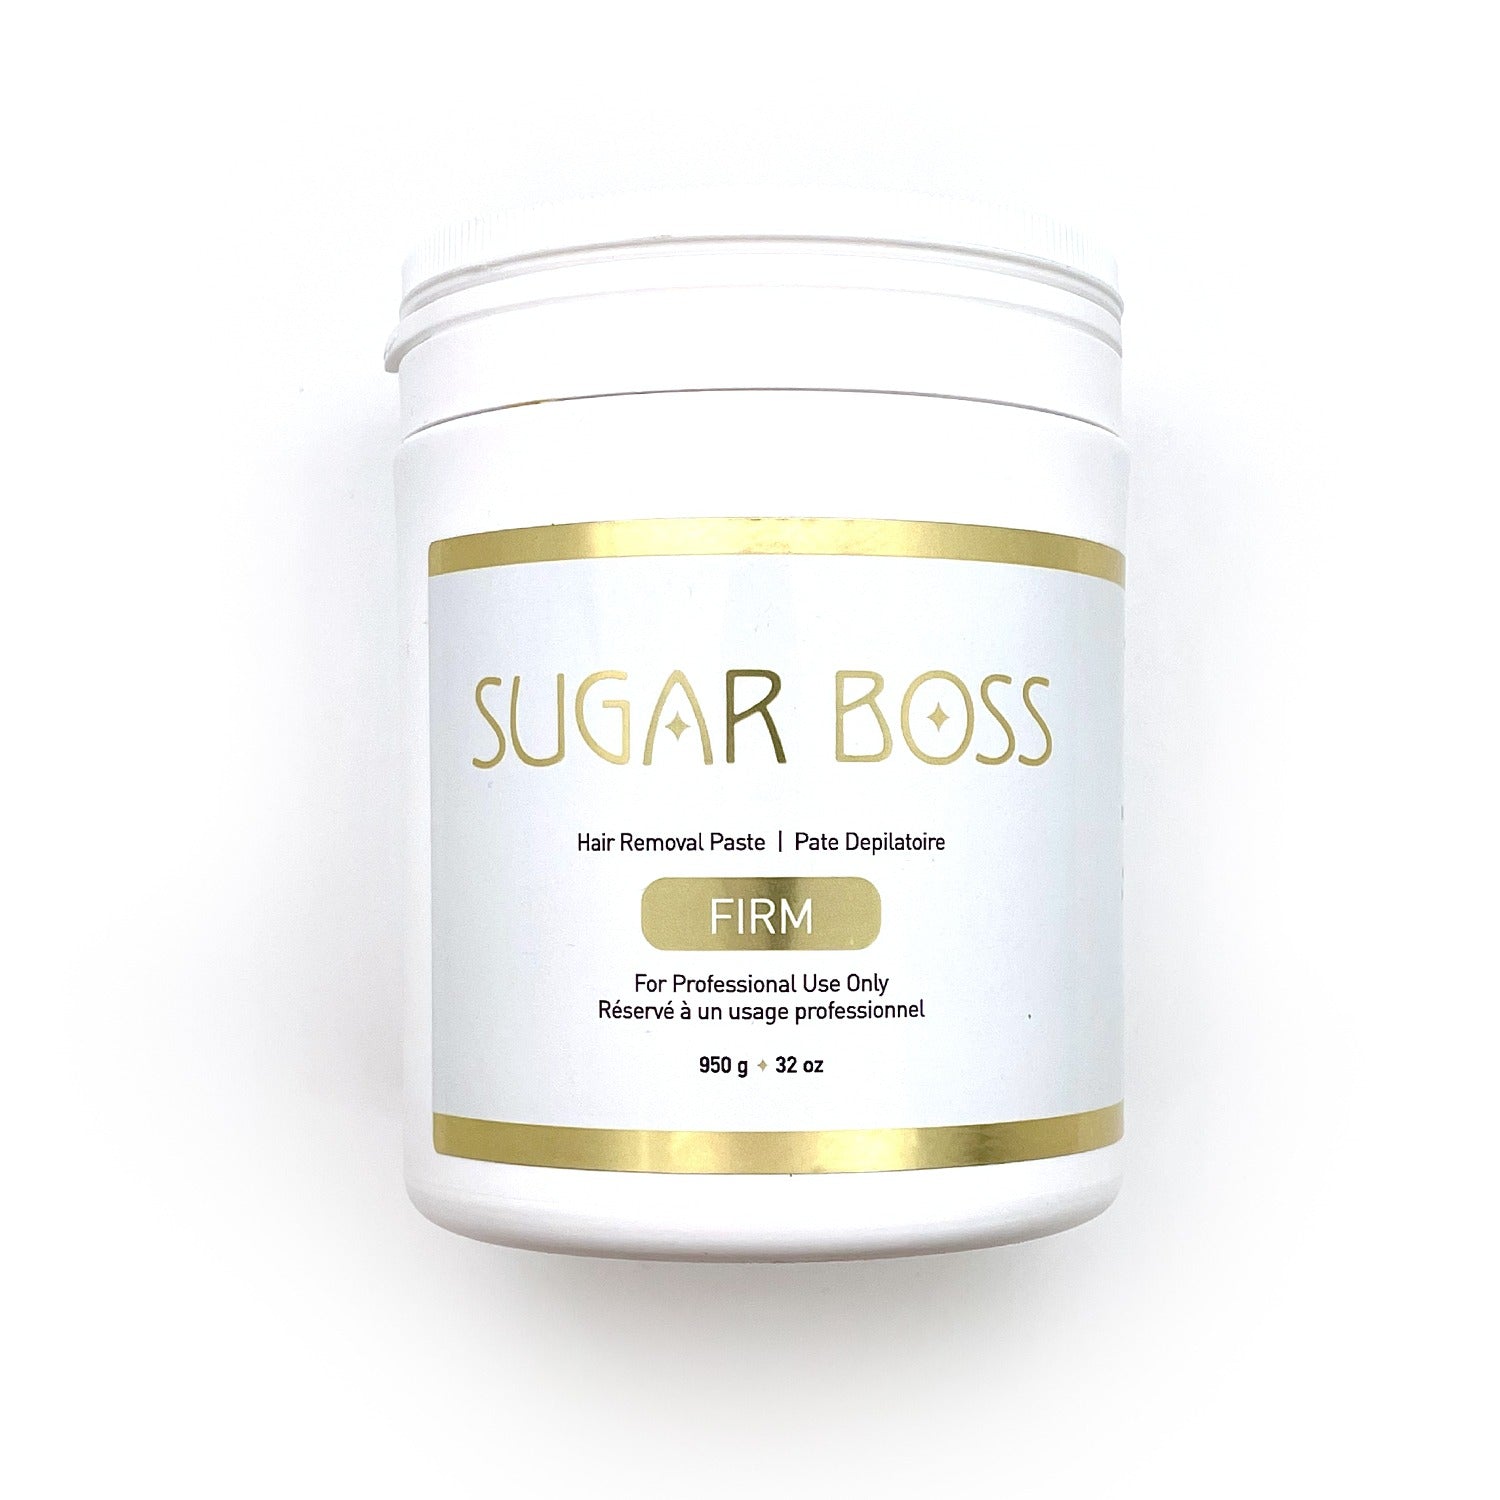 Sugar Boss - Firm Sugar Paste - Creata Beauty - Professional Beauty Products